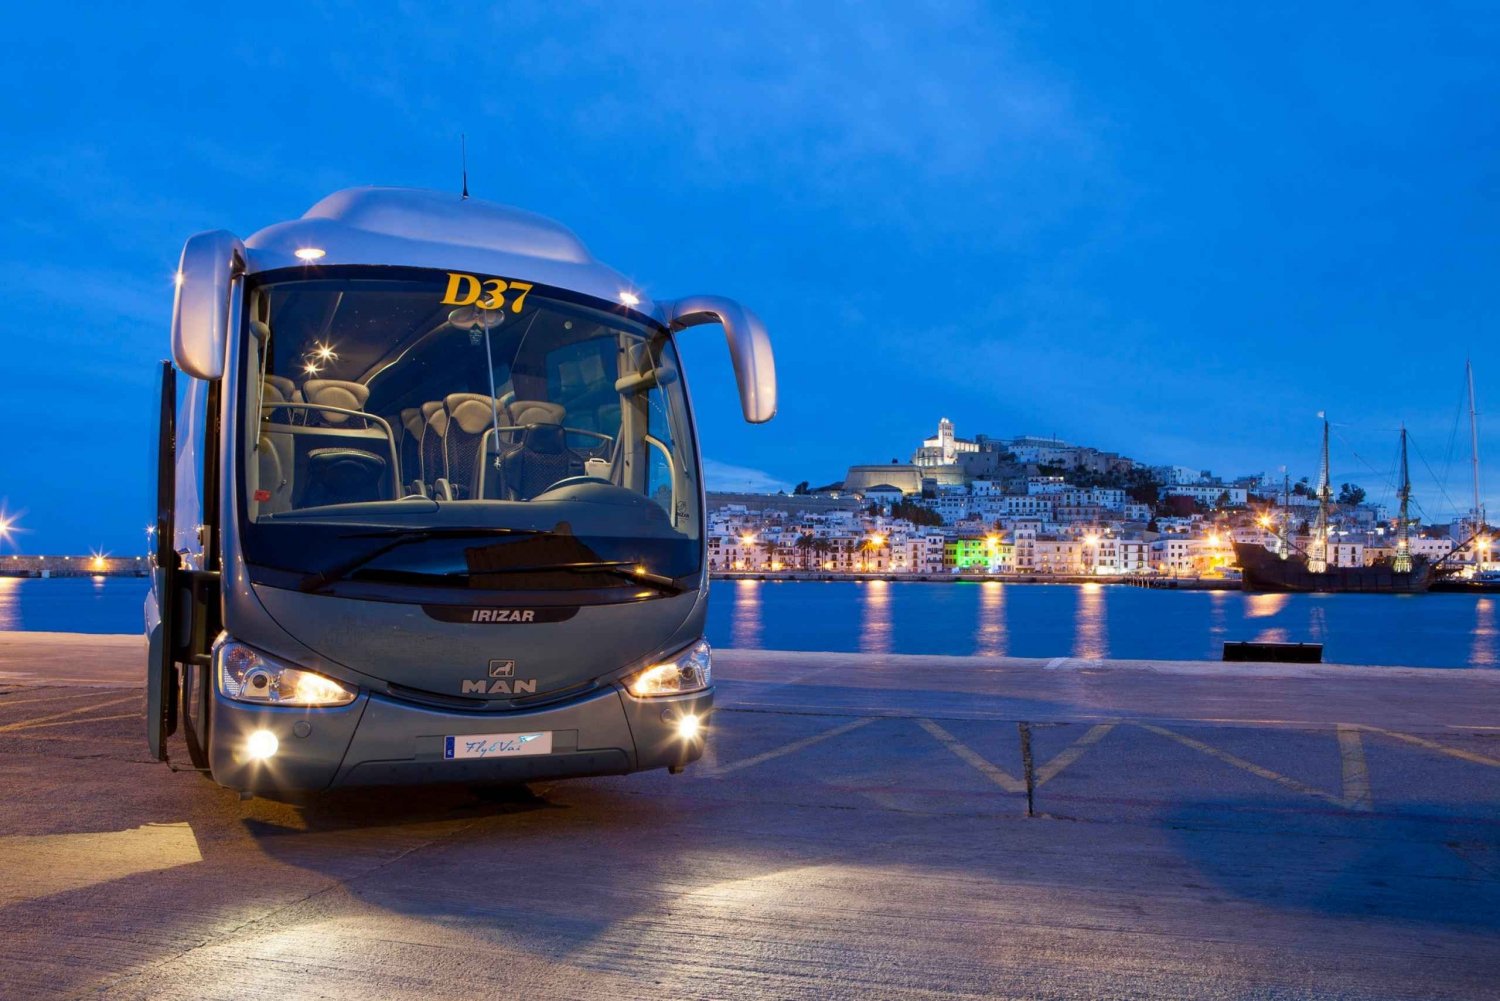 Transfert aller-retour de l'aéroport d'Ibiza à l'hôtel de Formentera